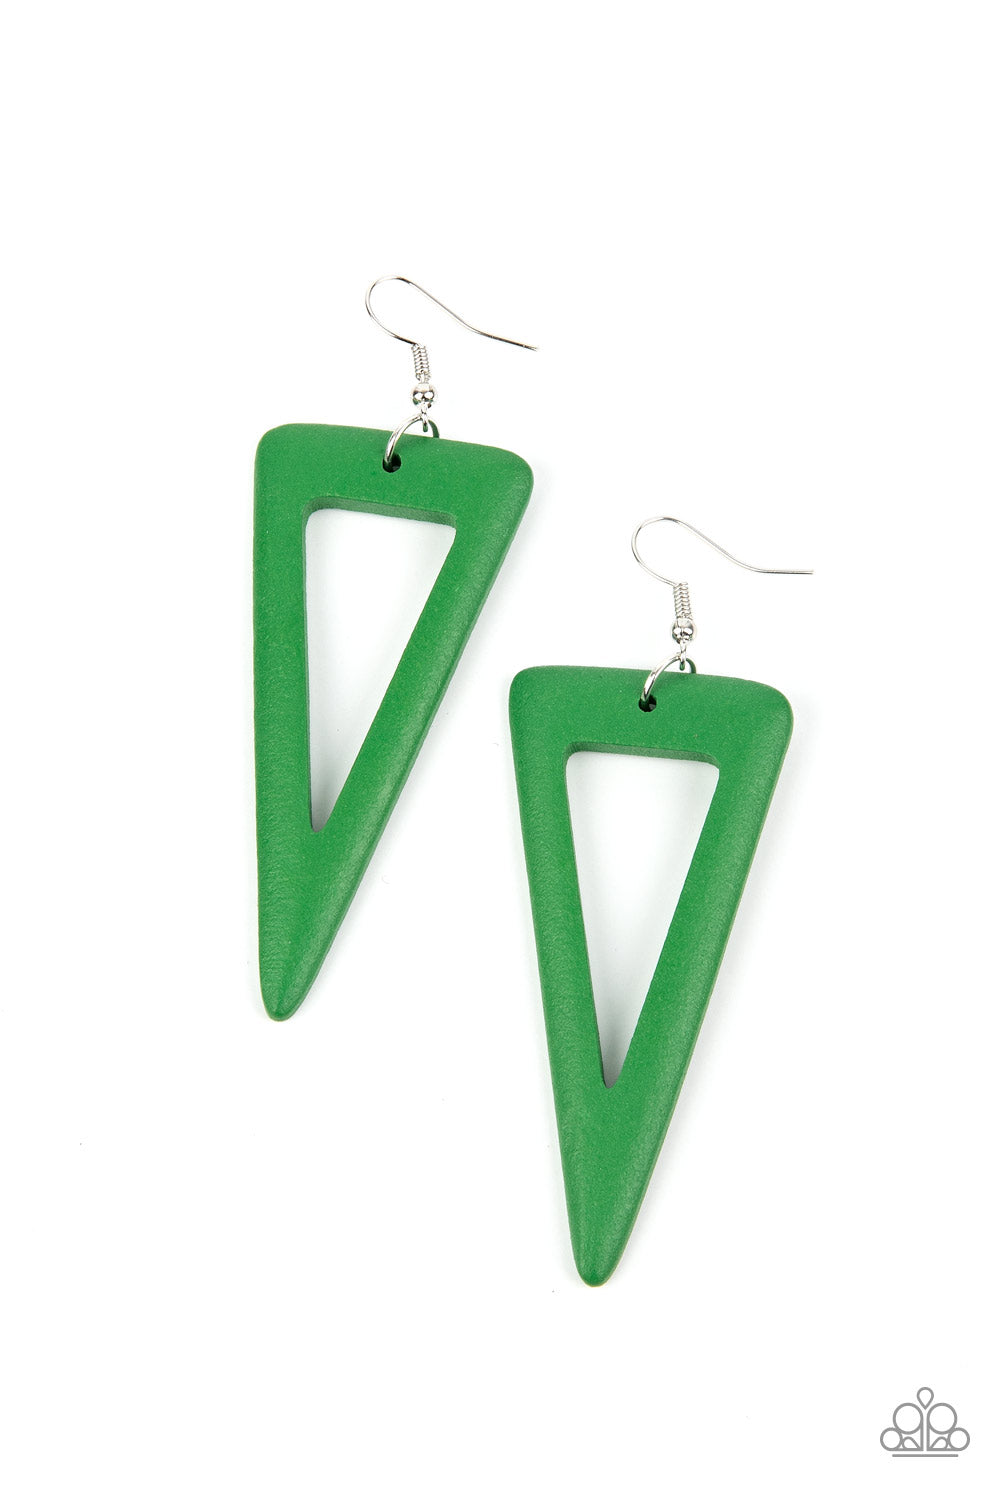 Bermuda Packpacker - green - Paparazzi earrings